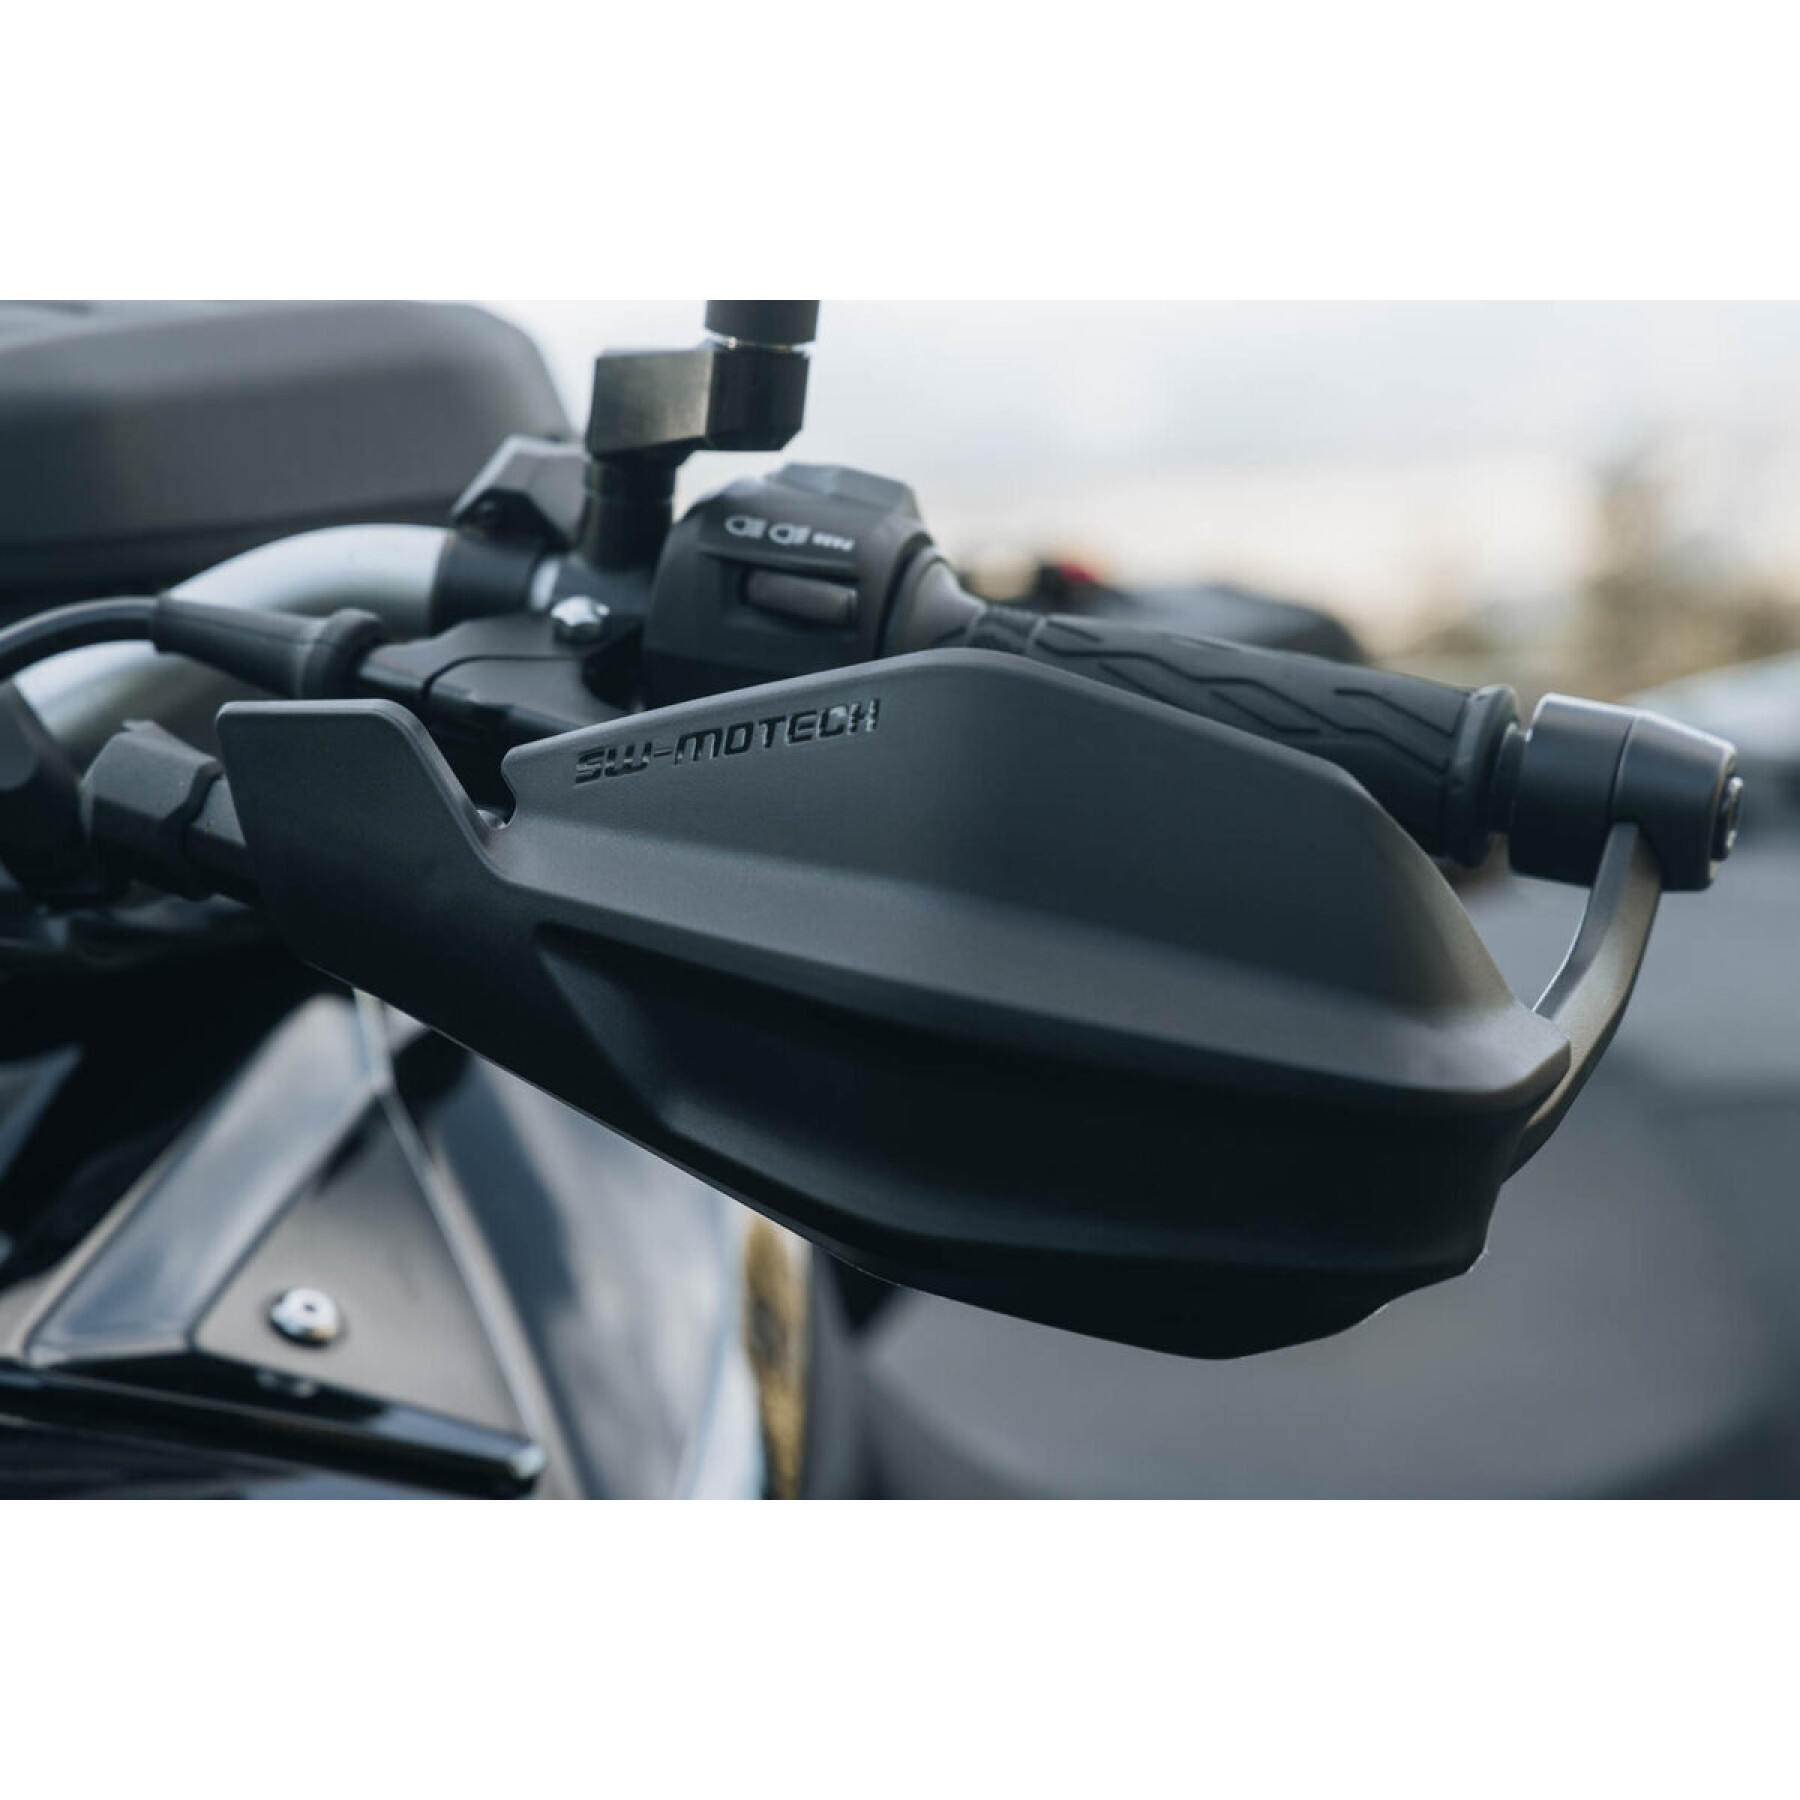 Motorcycle handguard kit for hollow handlebars SW-Motech Adventure